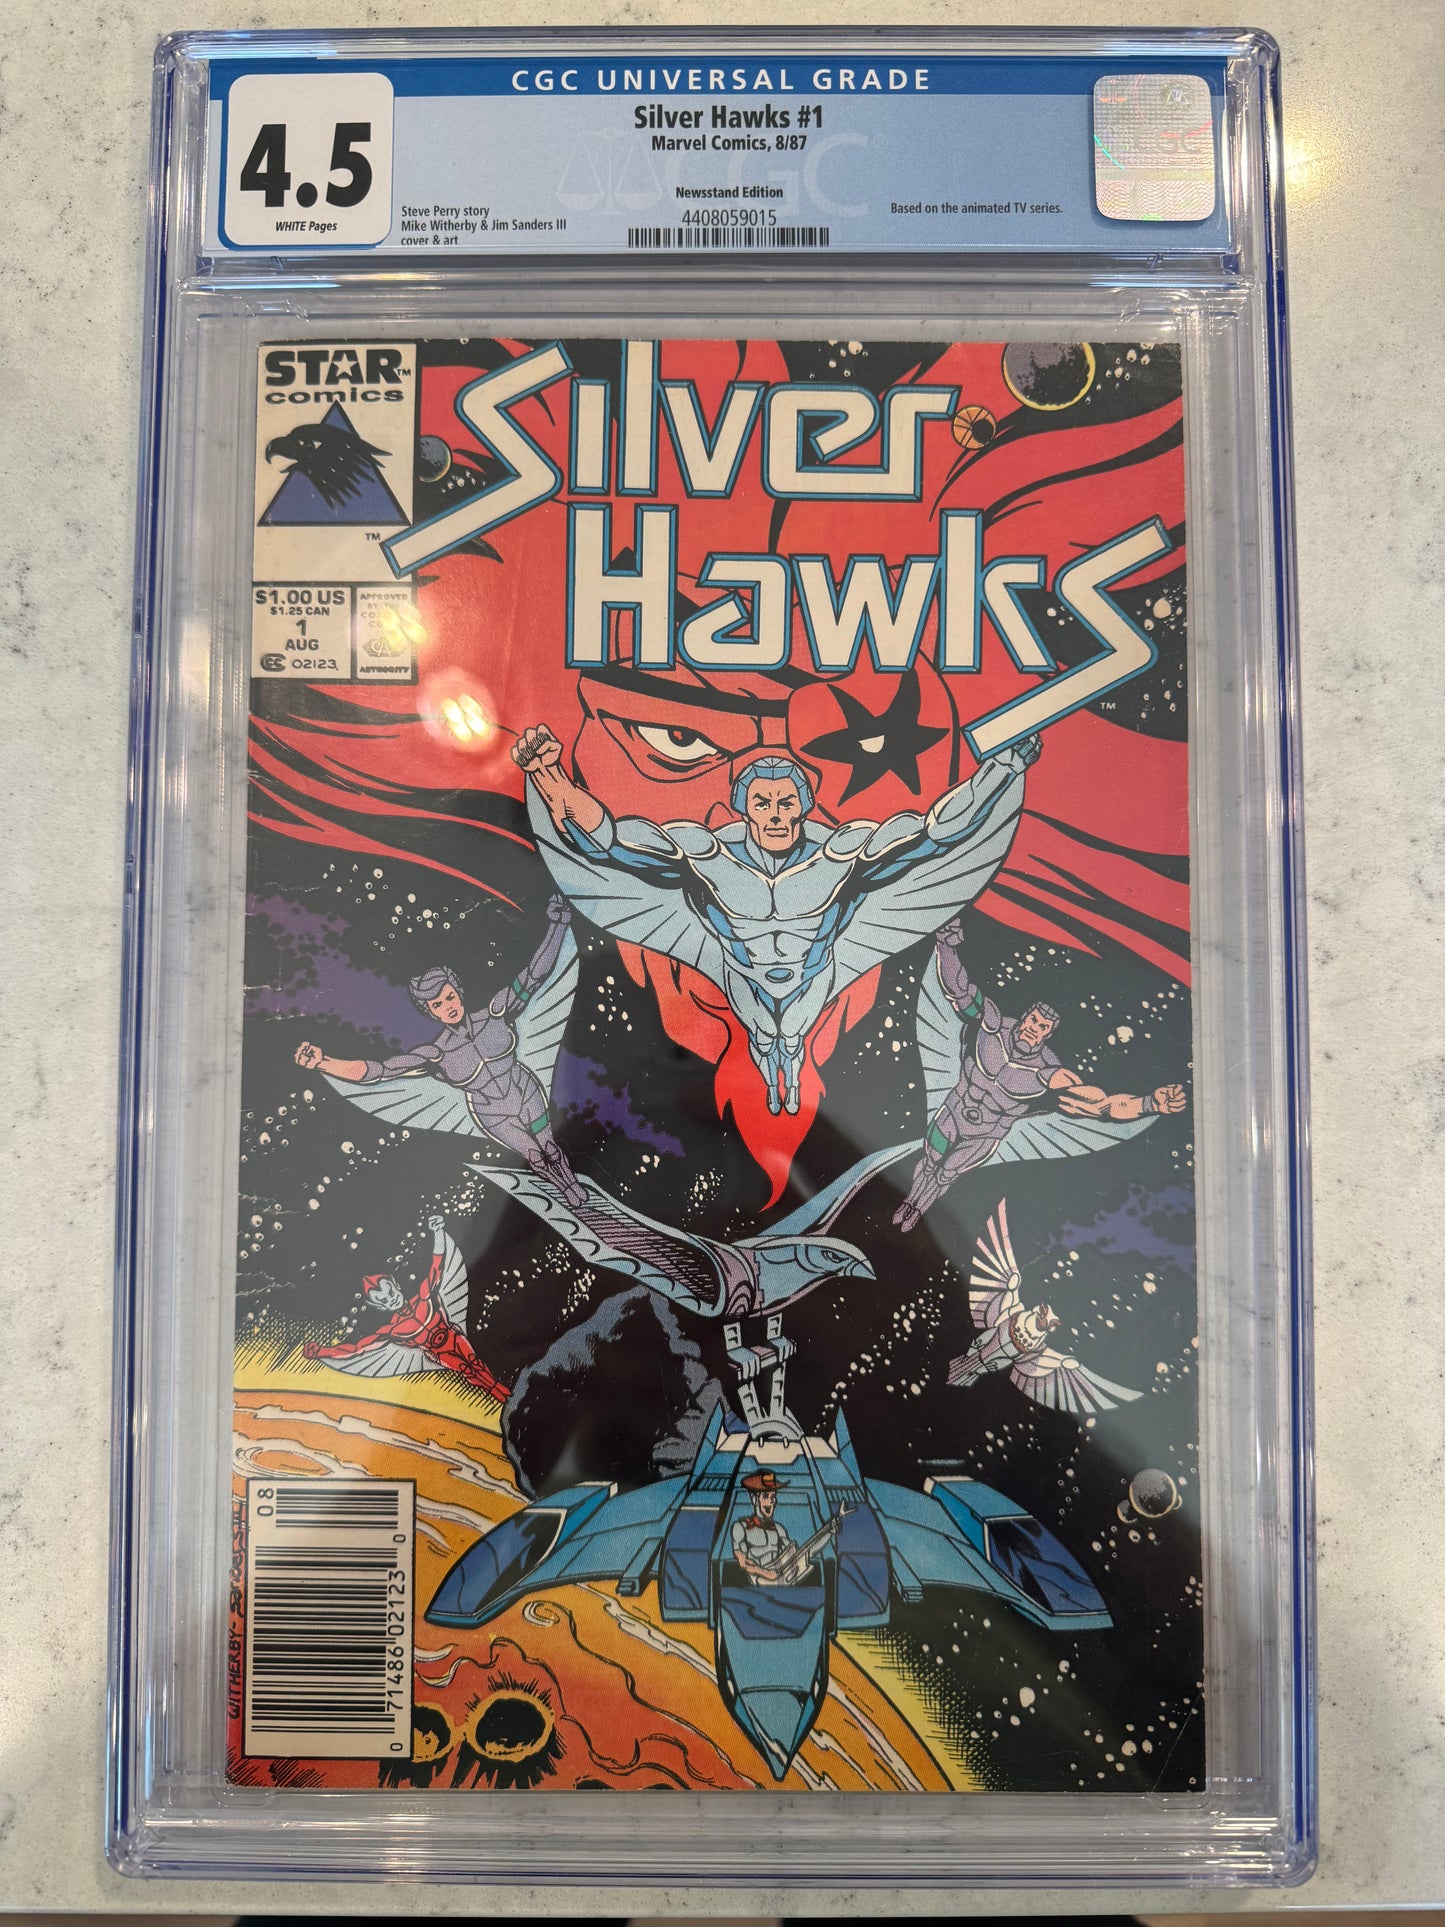 Silverhawks #1 CGC 4.5 (1987 Marvel/Star Comics)